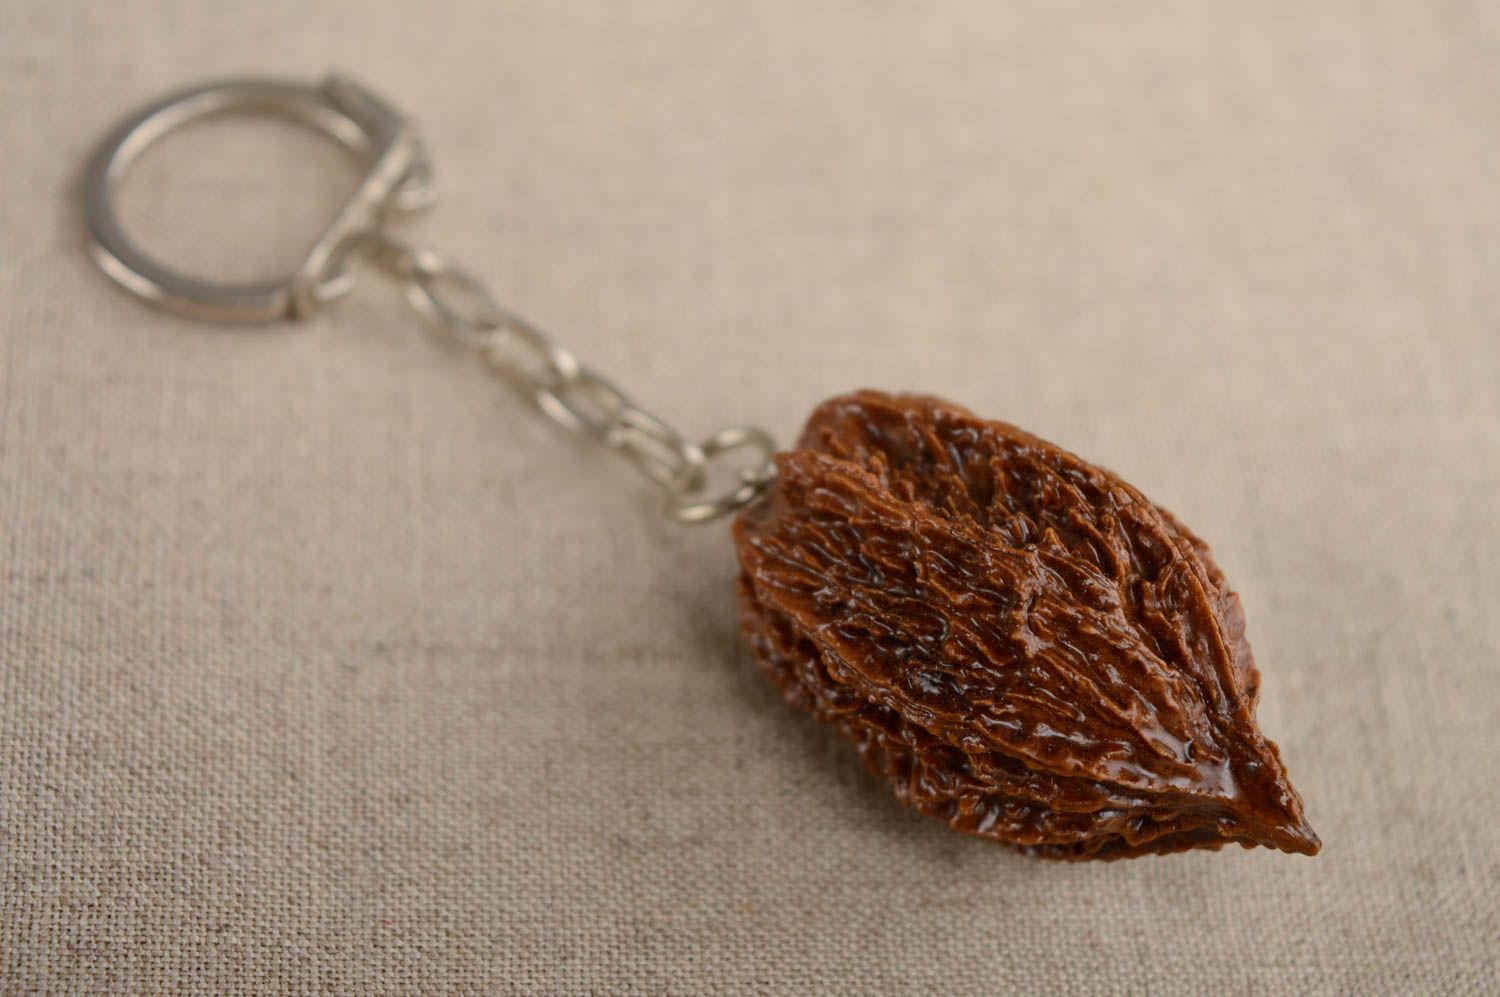 Unusual nut shell keychain photo 1